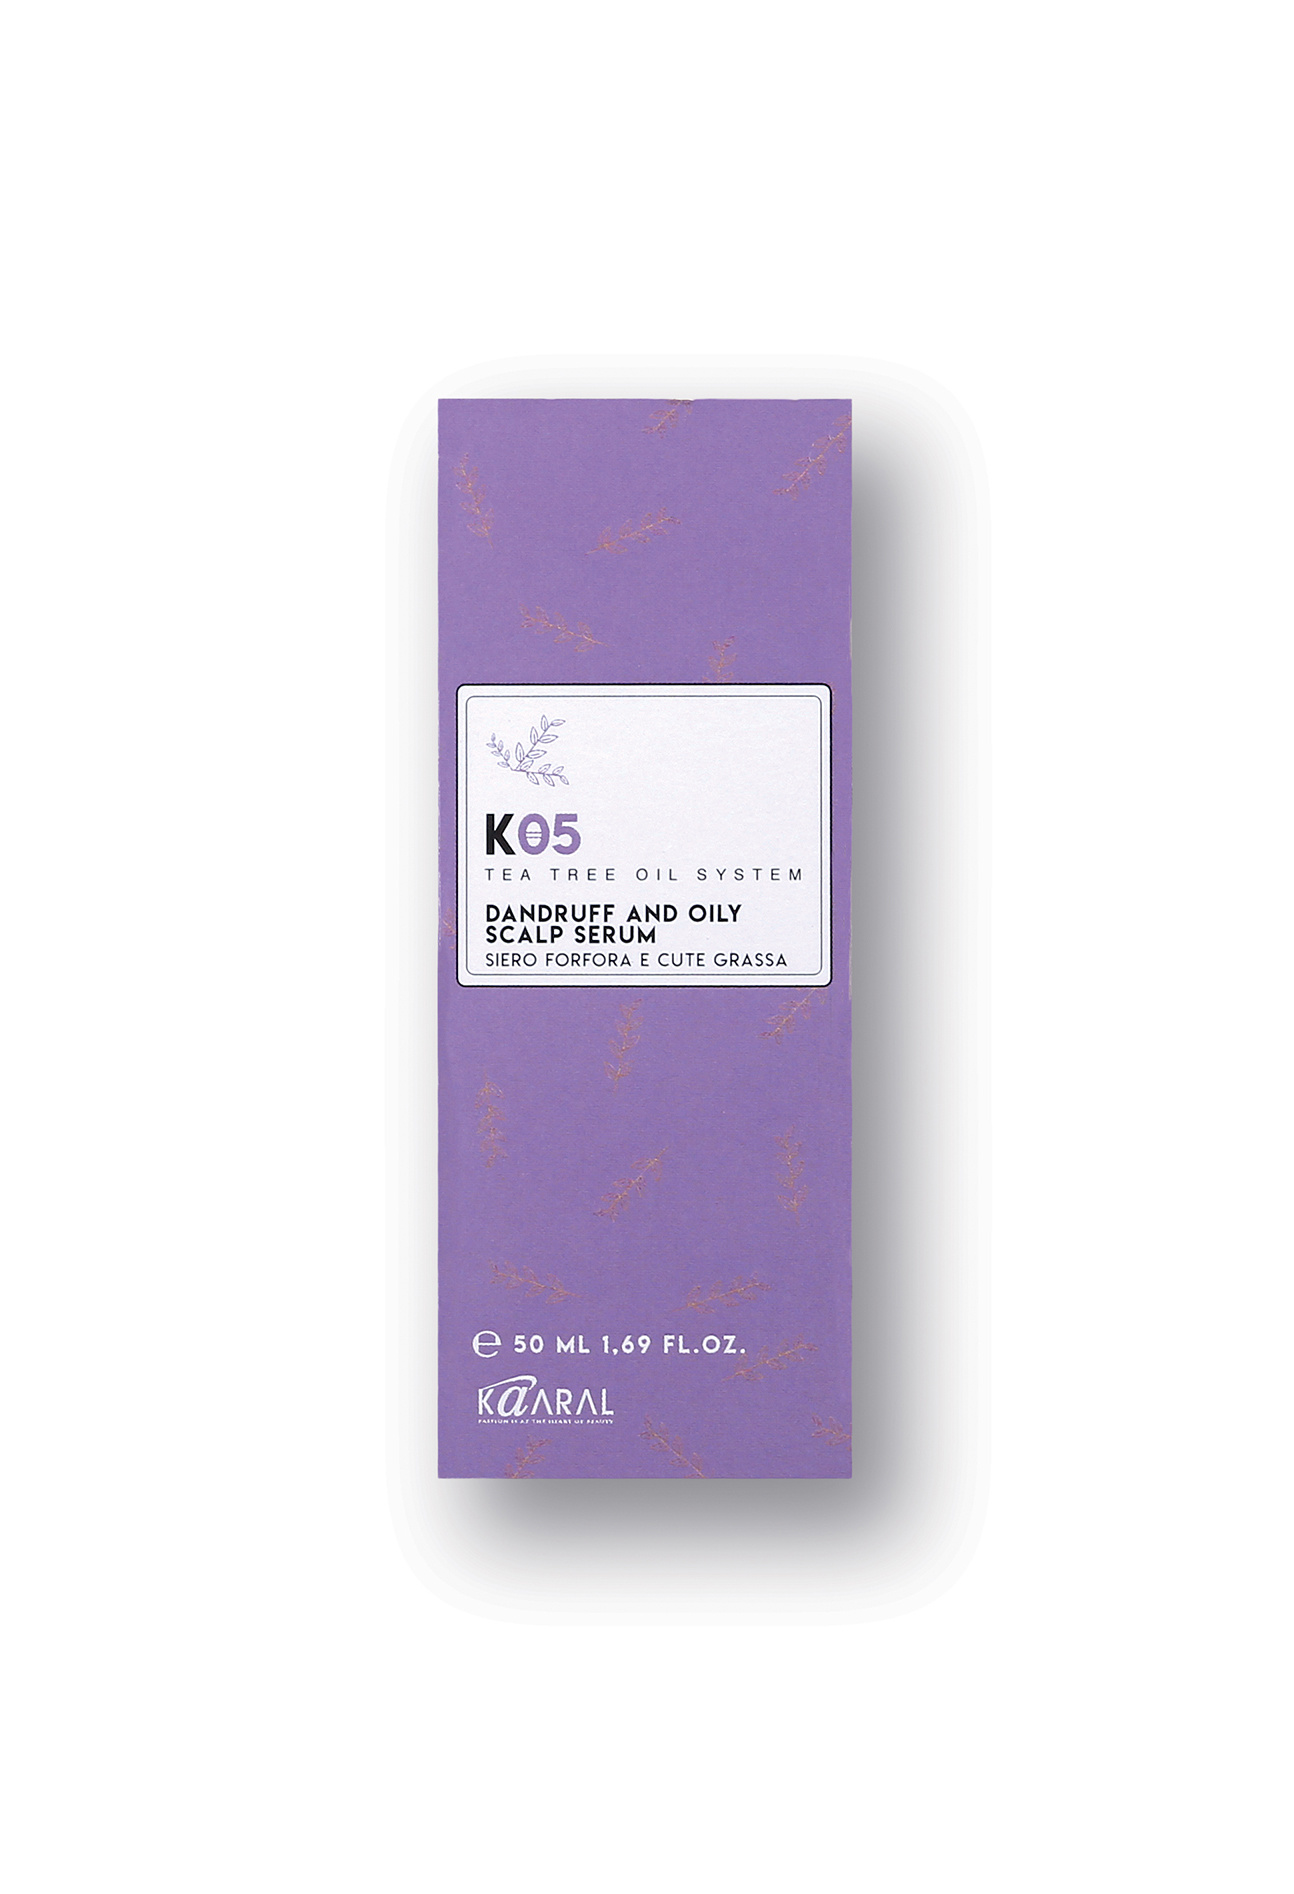 Kaaral K05 Dandruff and oily scalp serum 50ml